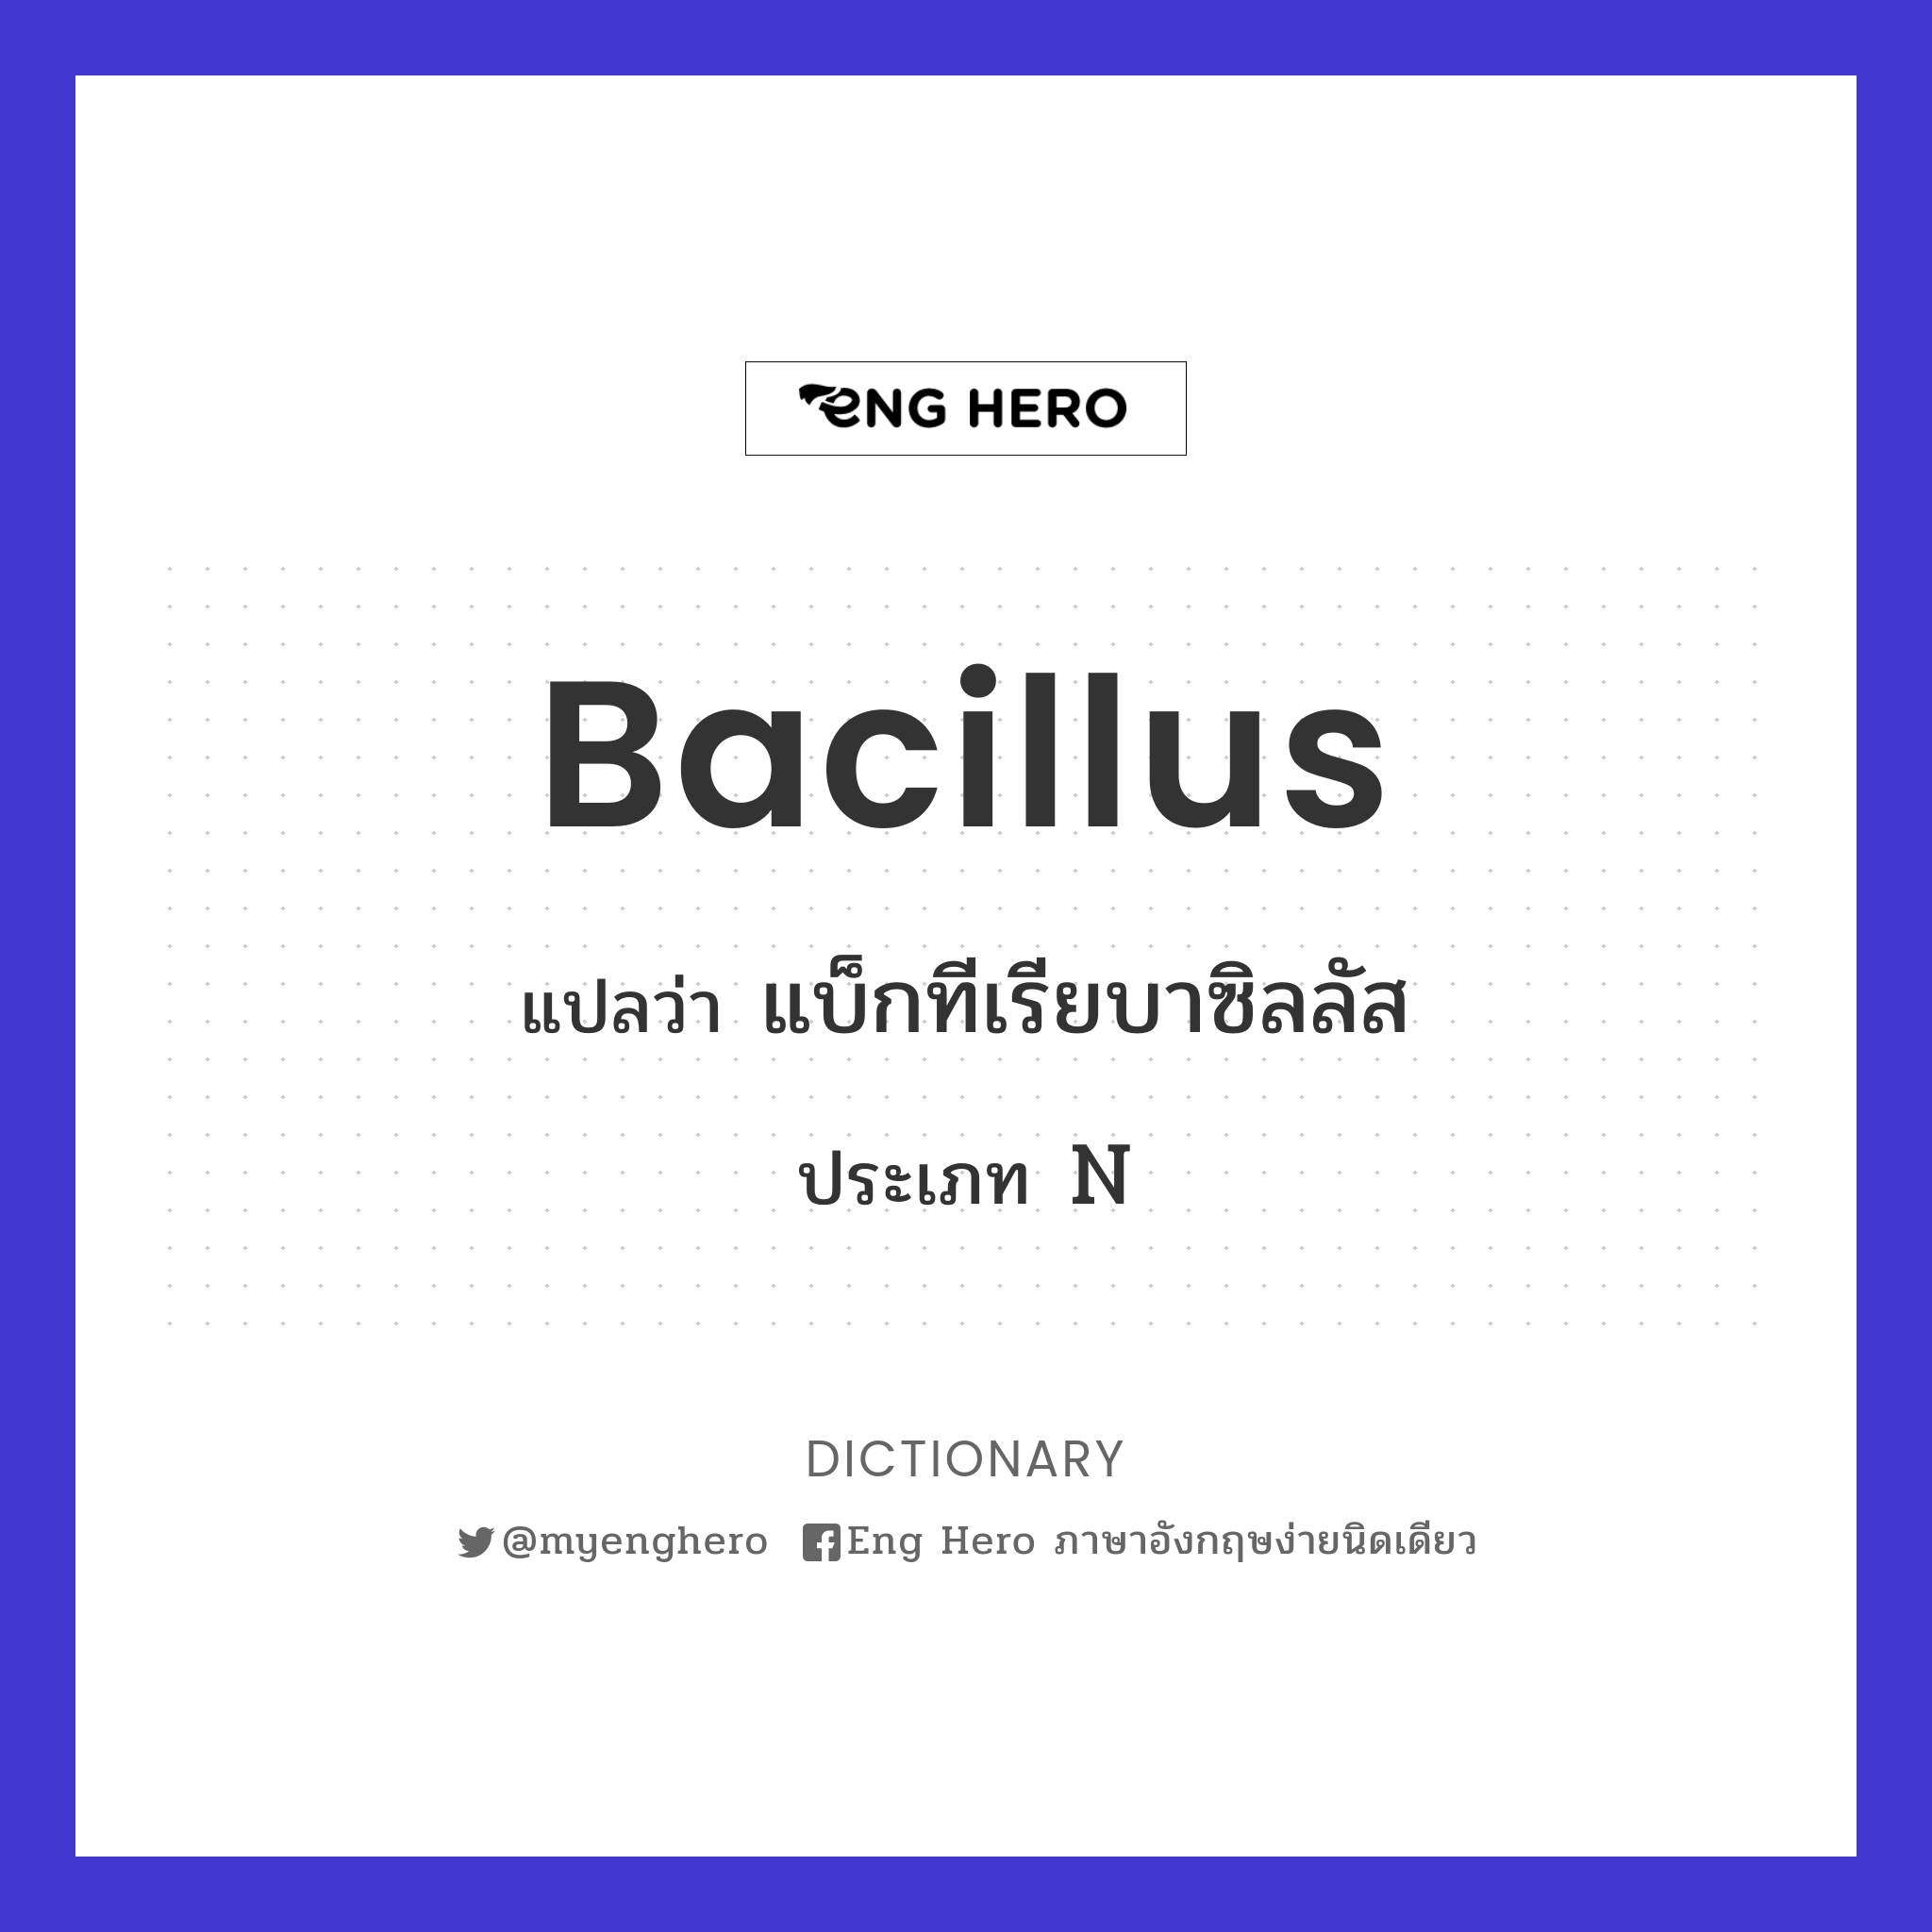 bacillus